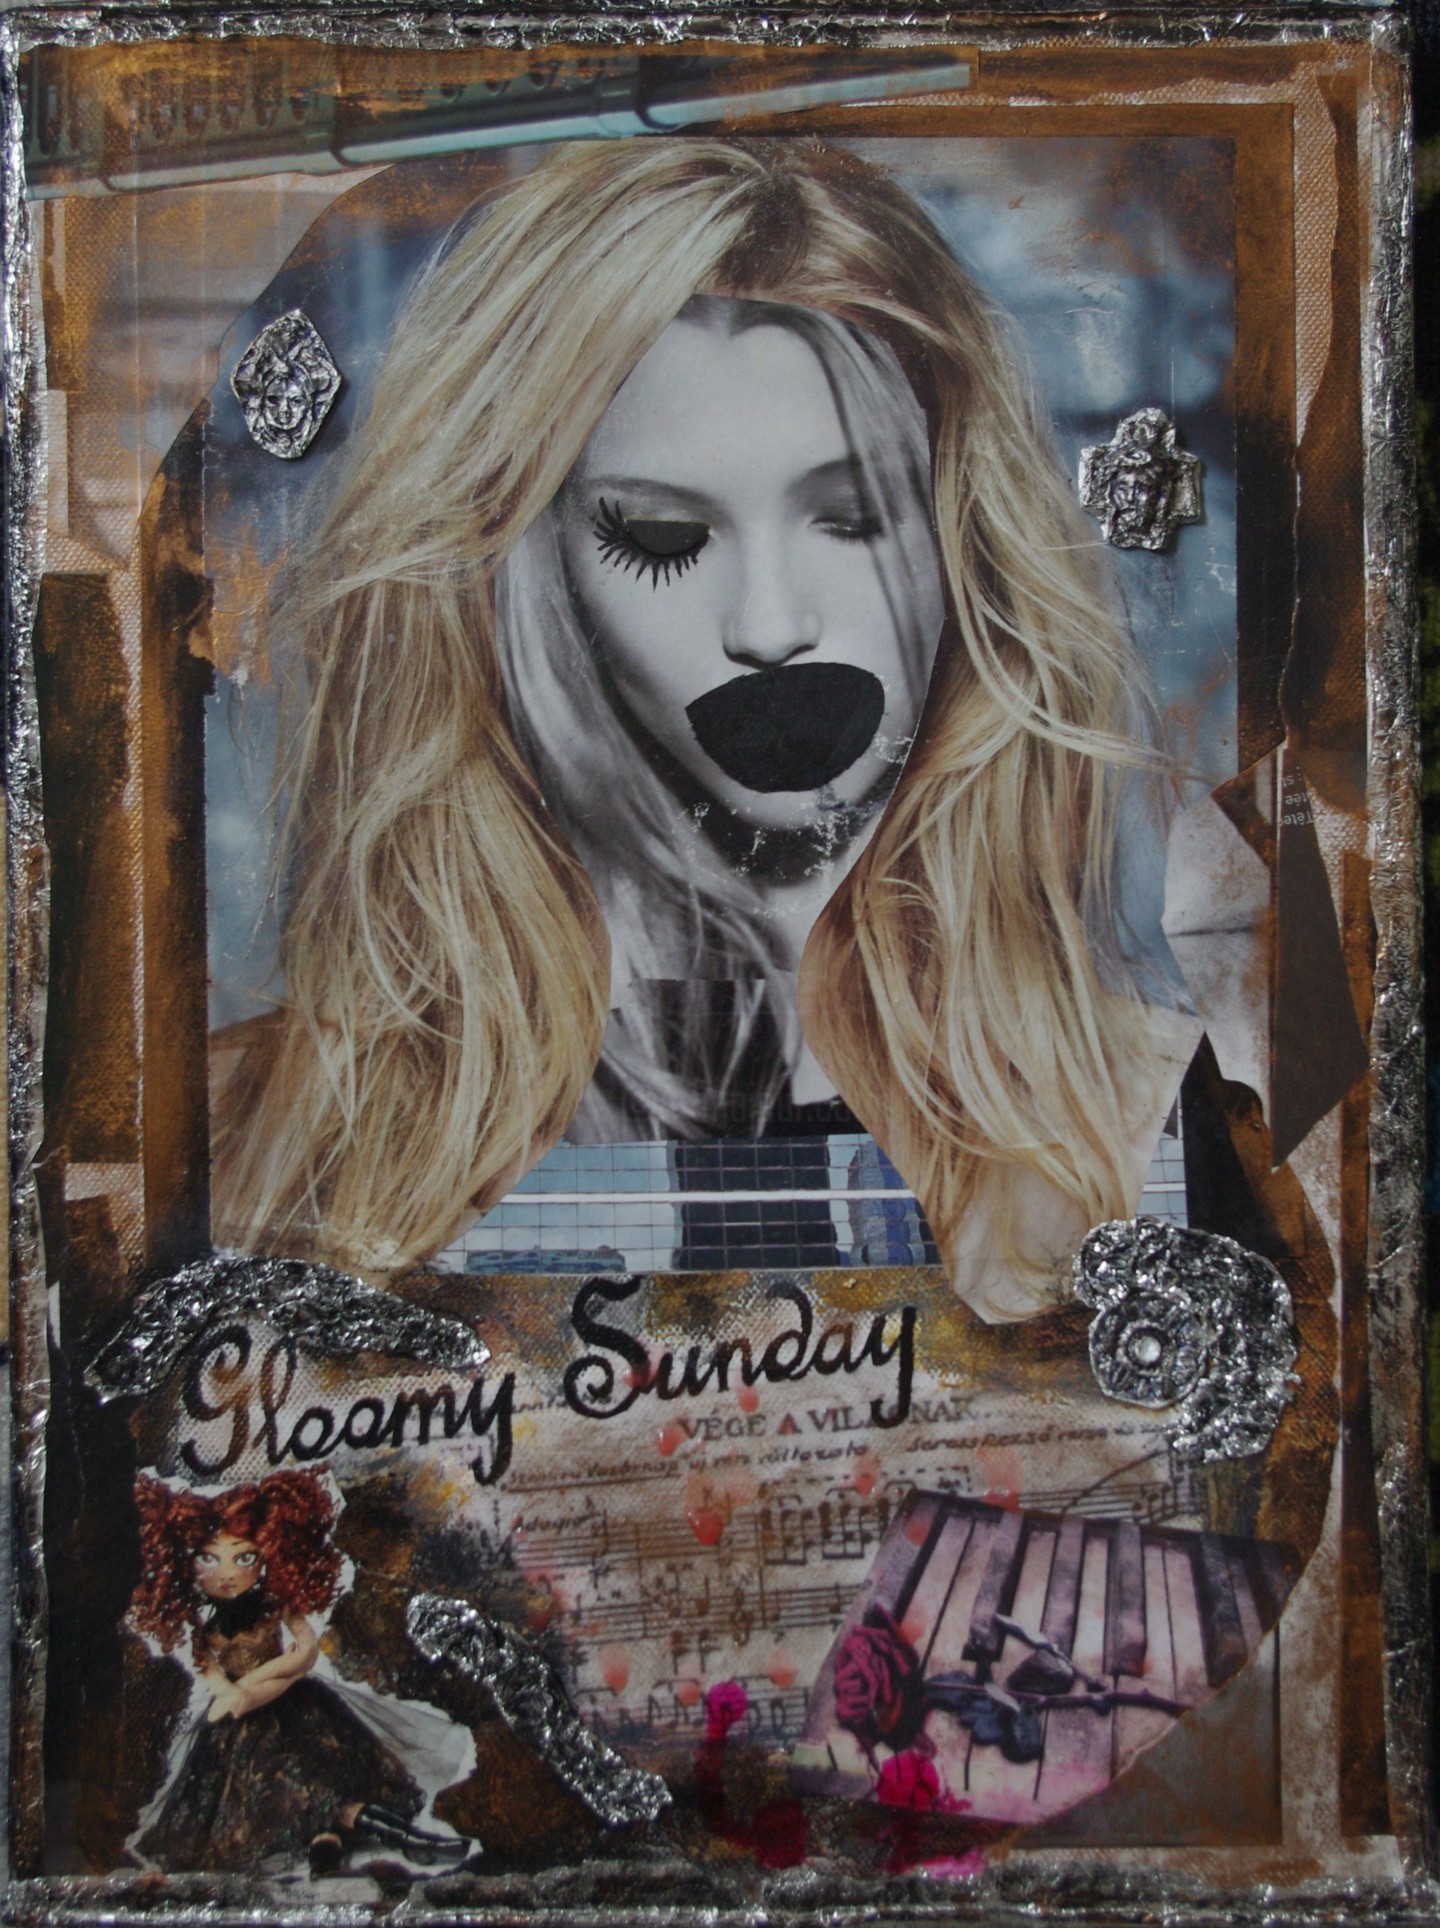 gloomy sunday poster